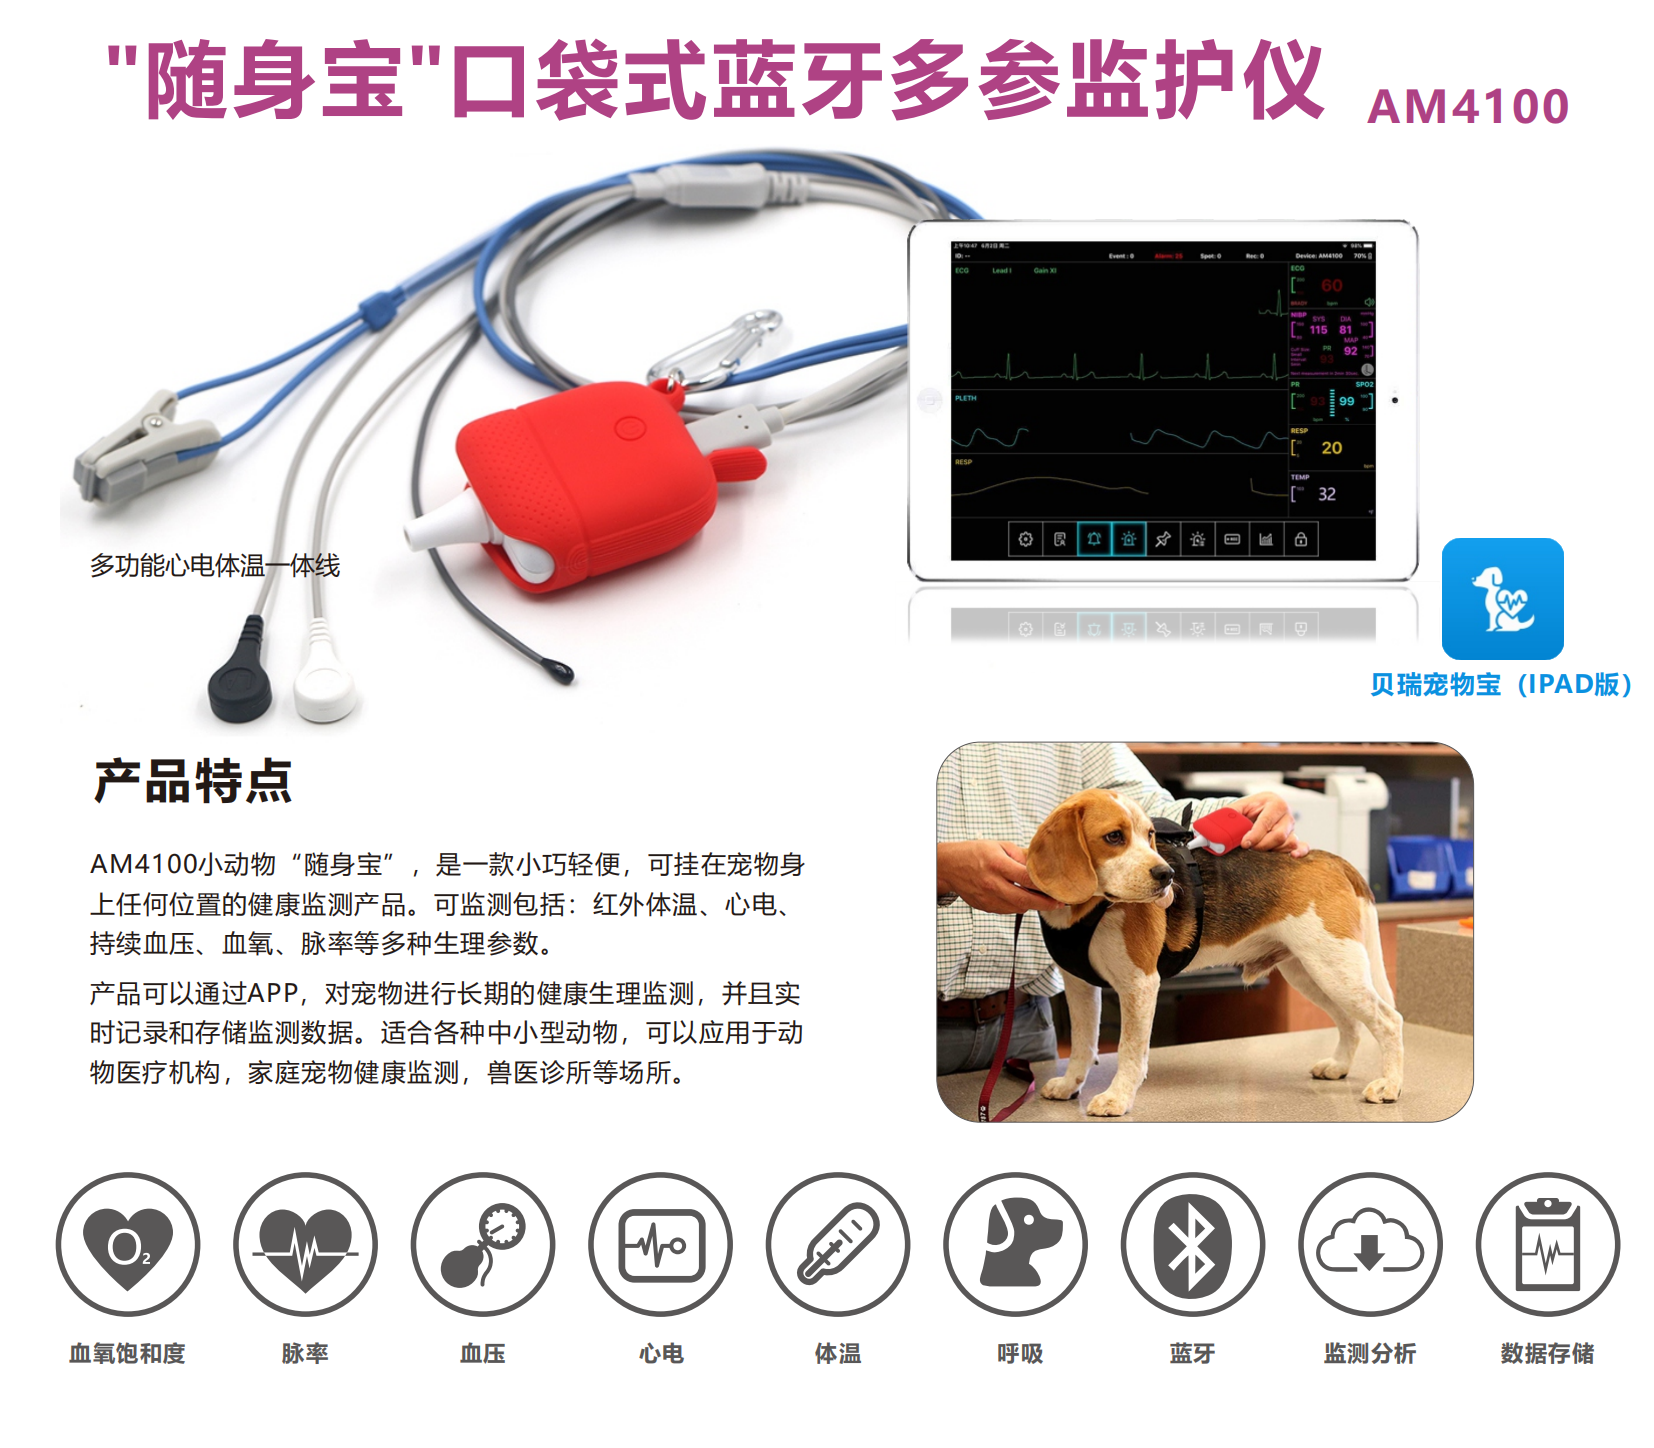 AM4100监护仪-彩页.png